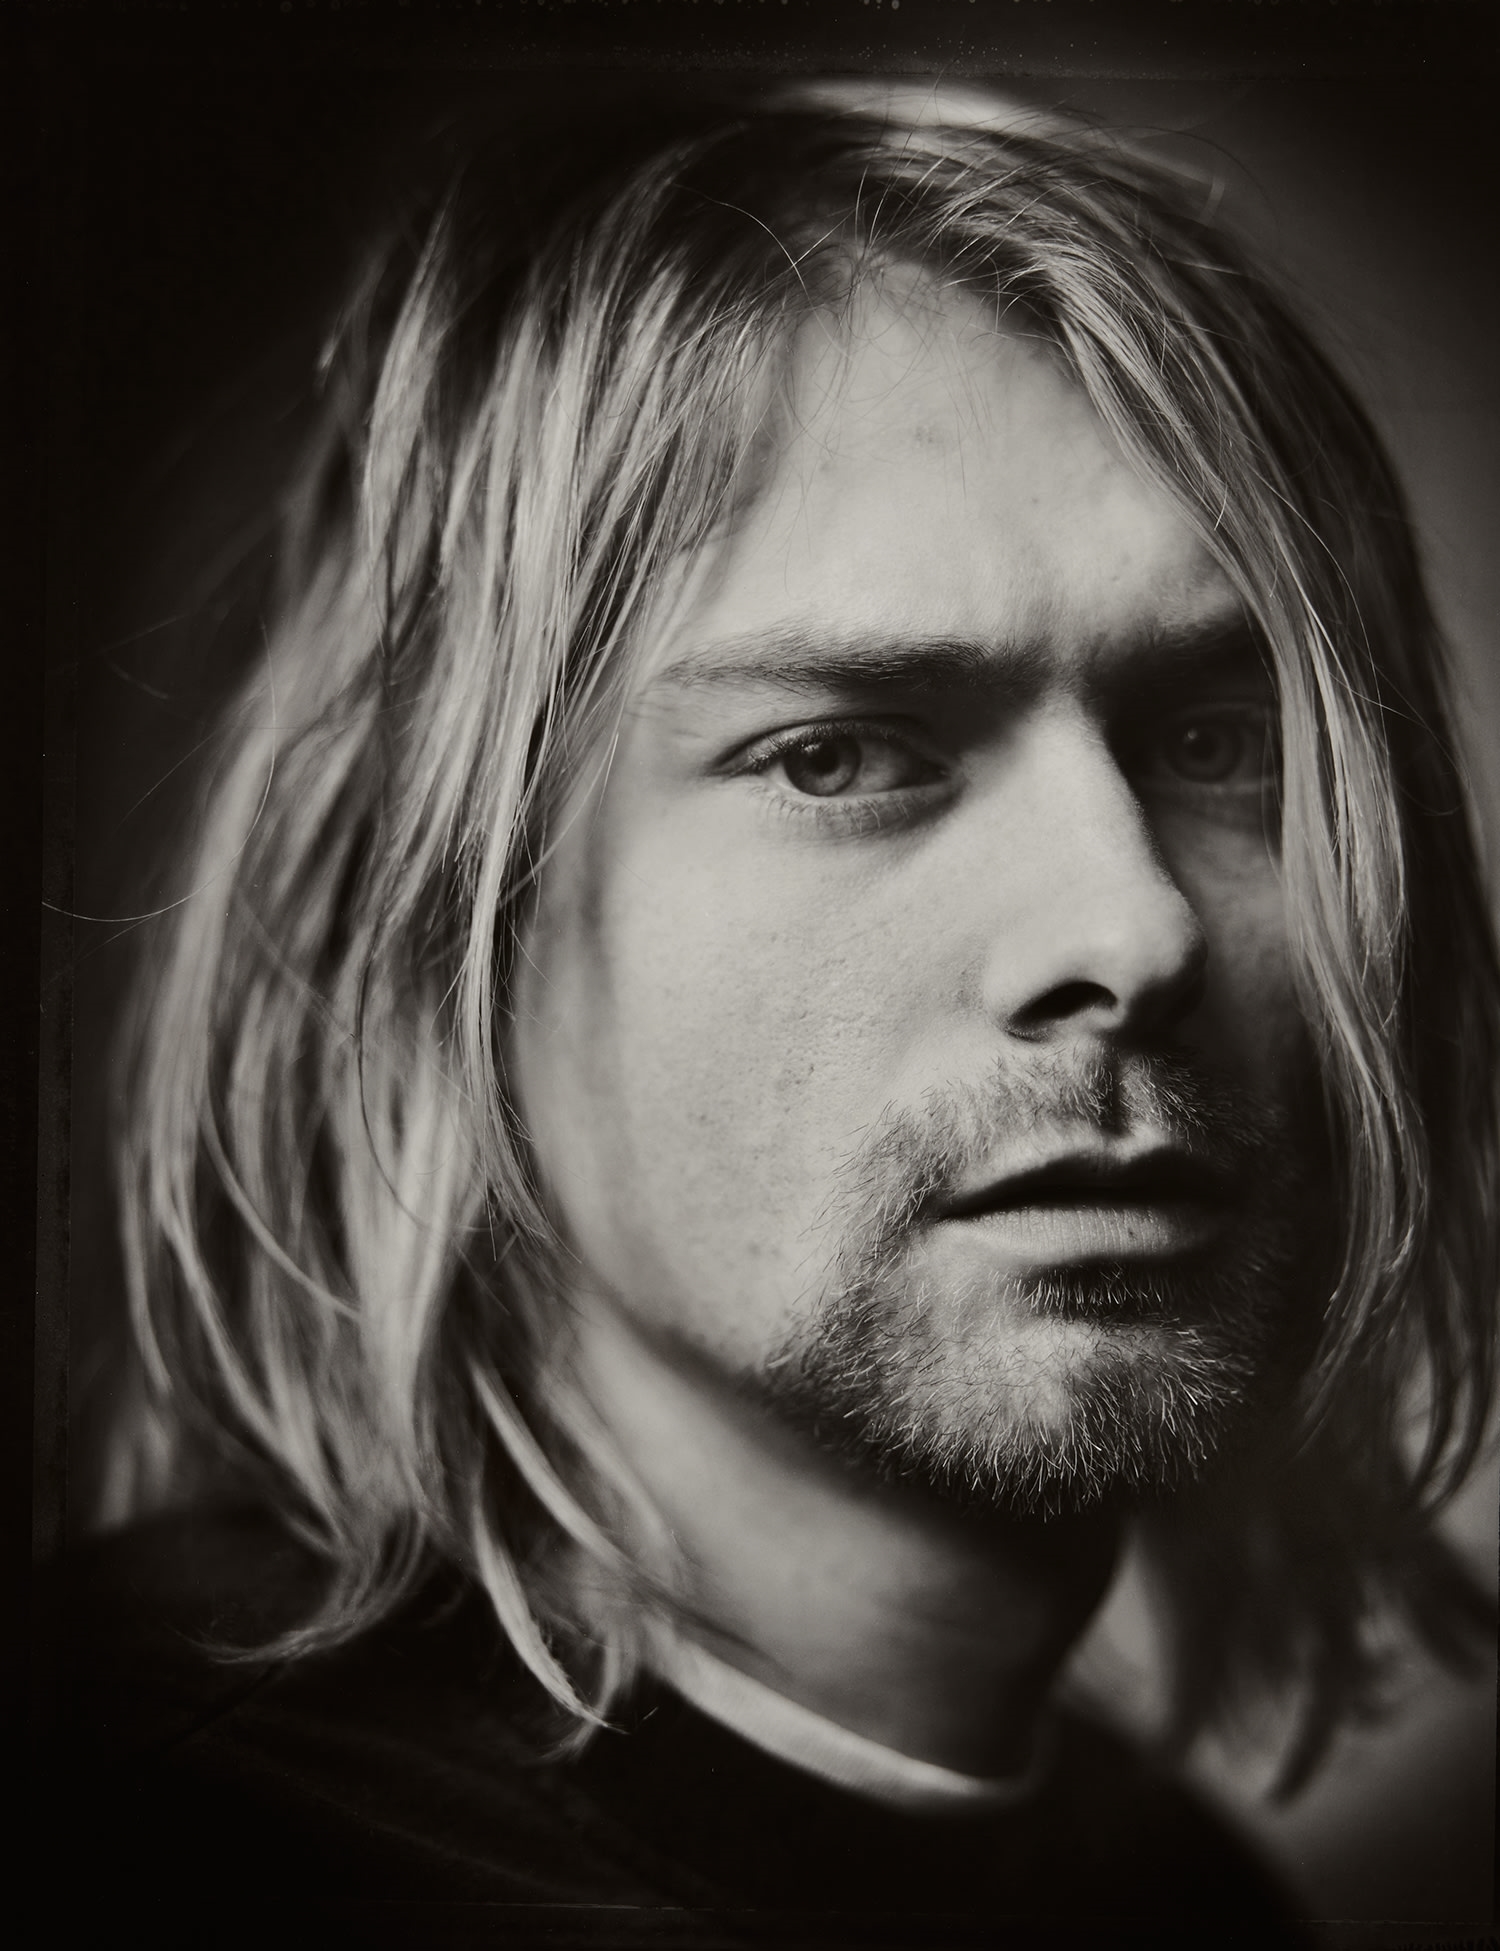 Kurt Cobain, Kalamazoo, Michigan - Mark Seliger